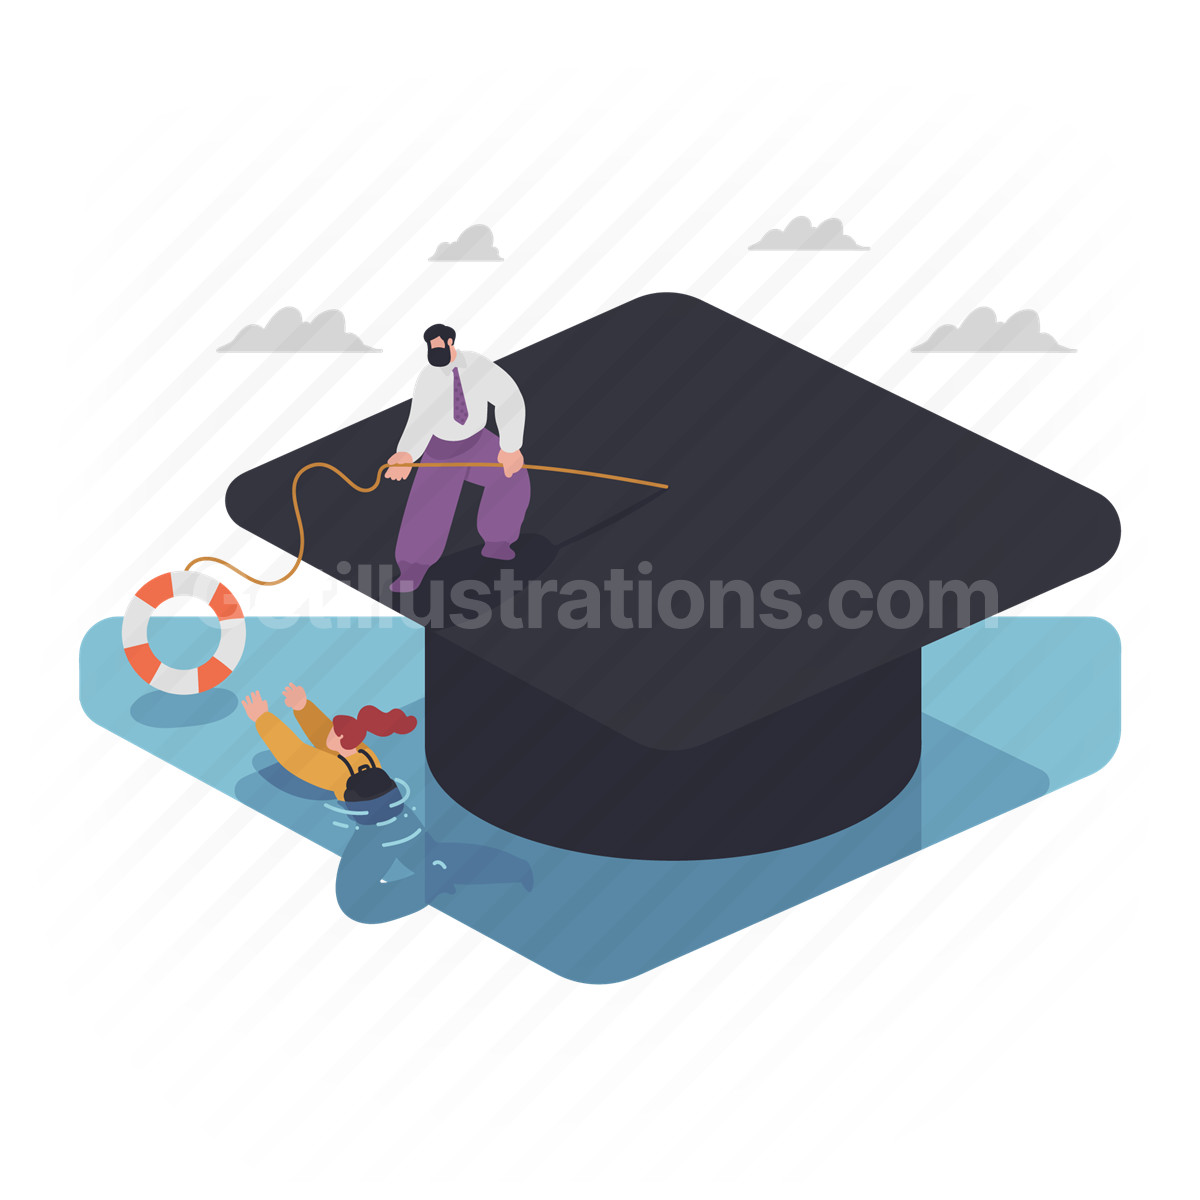 Education and training illustration